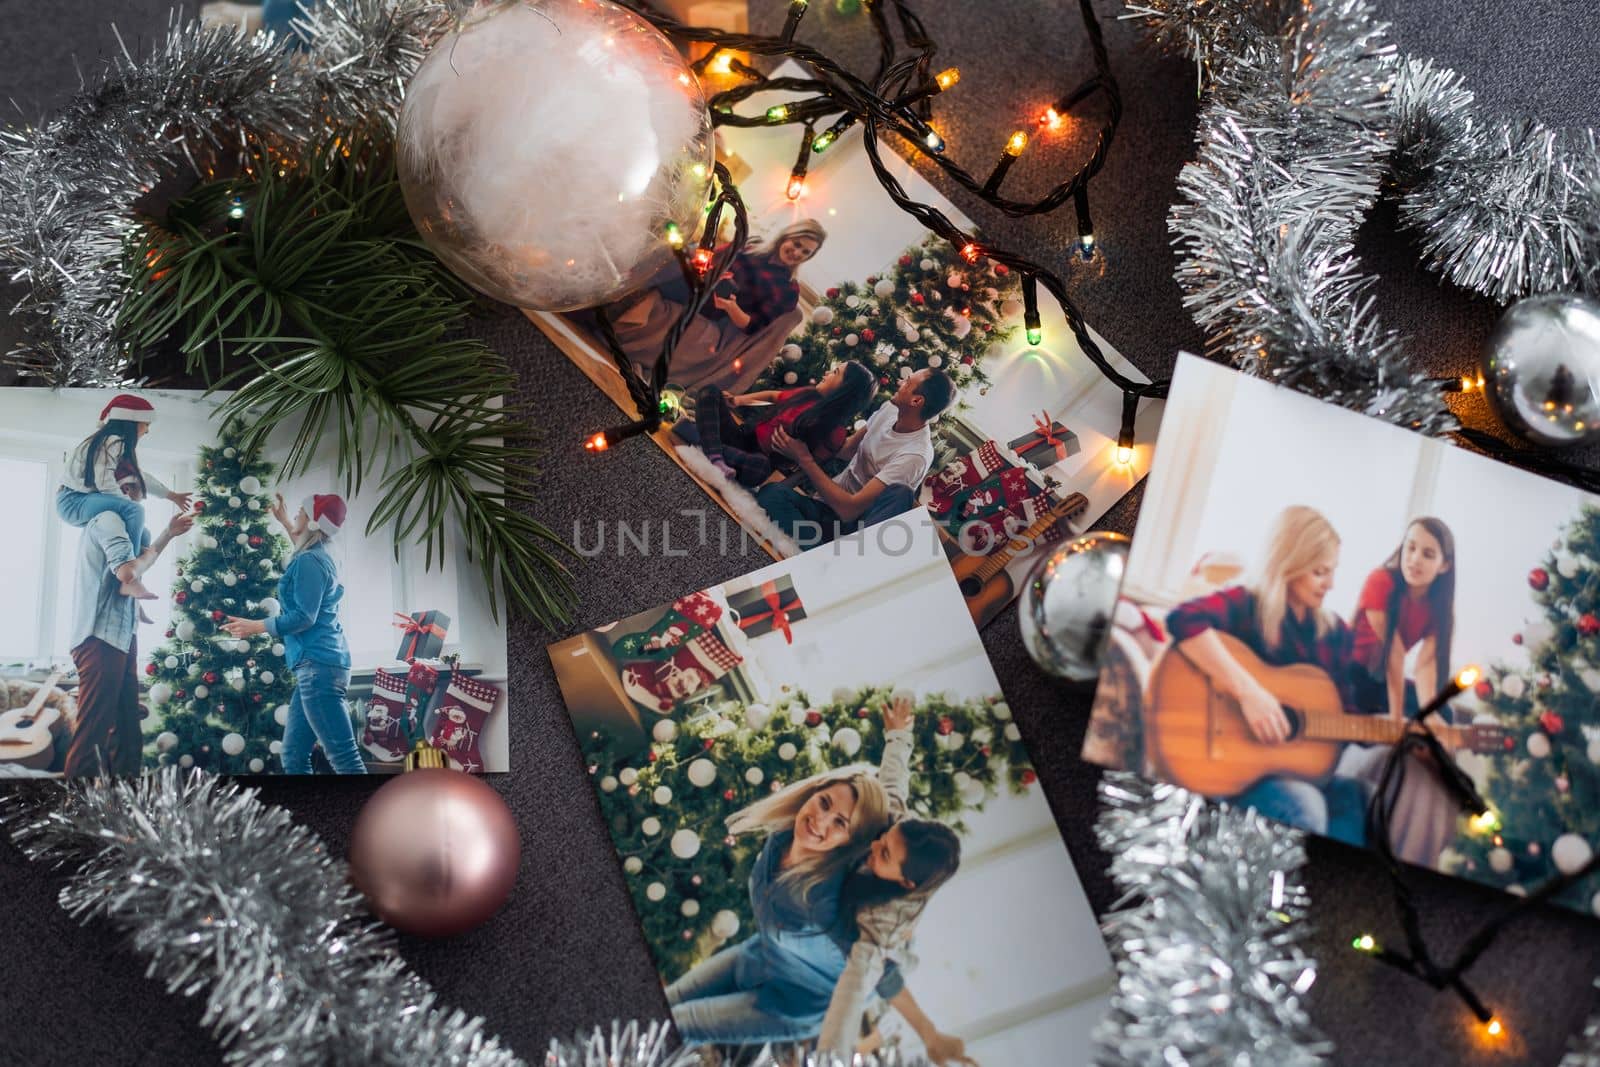 Photos of family against Christmas lights decor background.